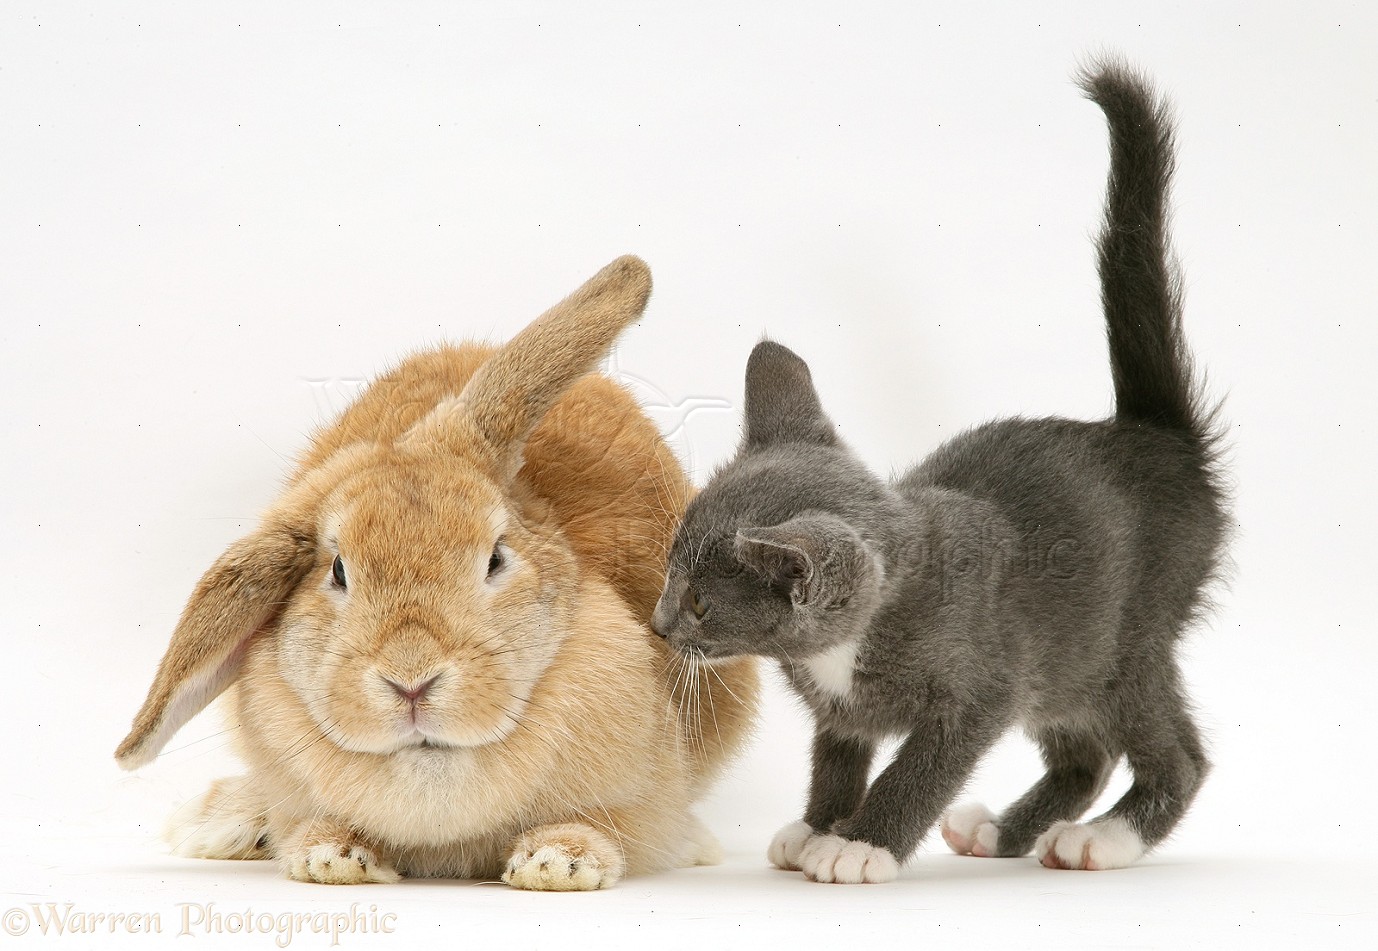  - 31126-Kitten-and-rabbit-white-background